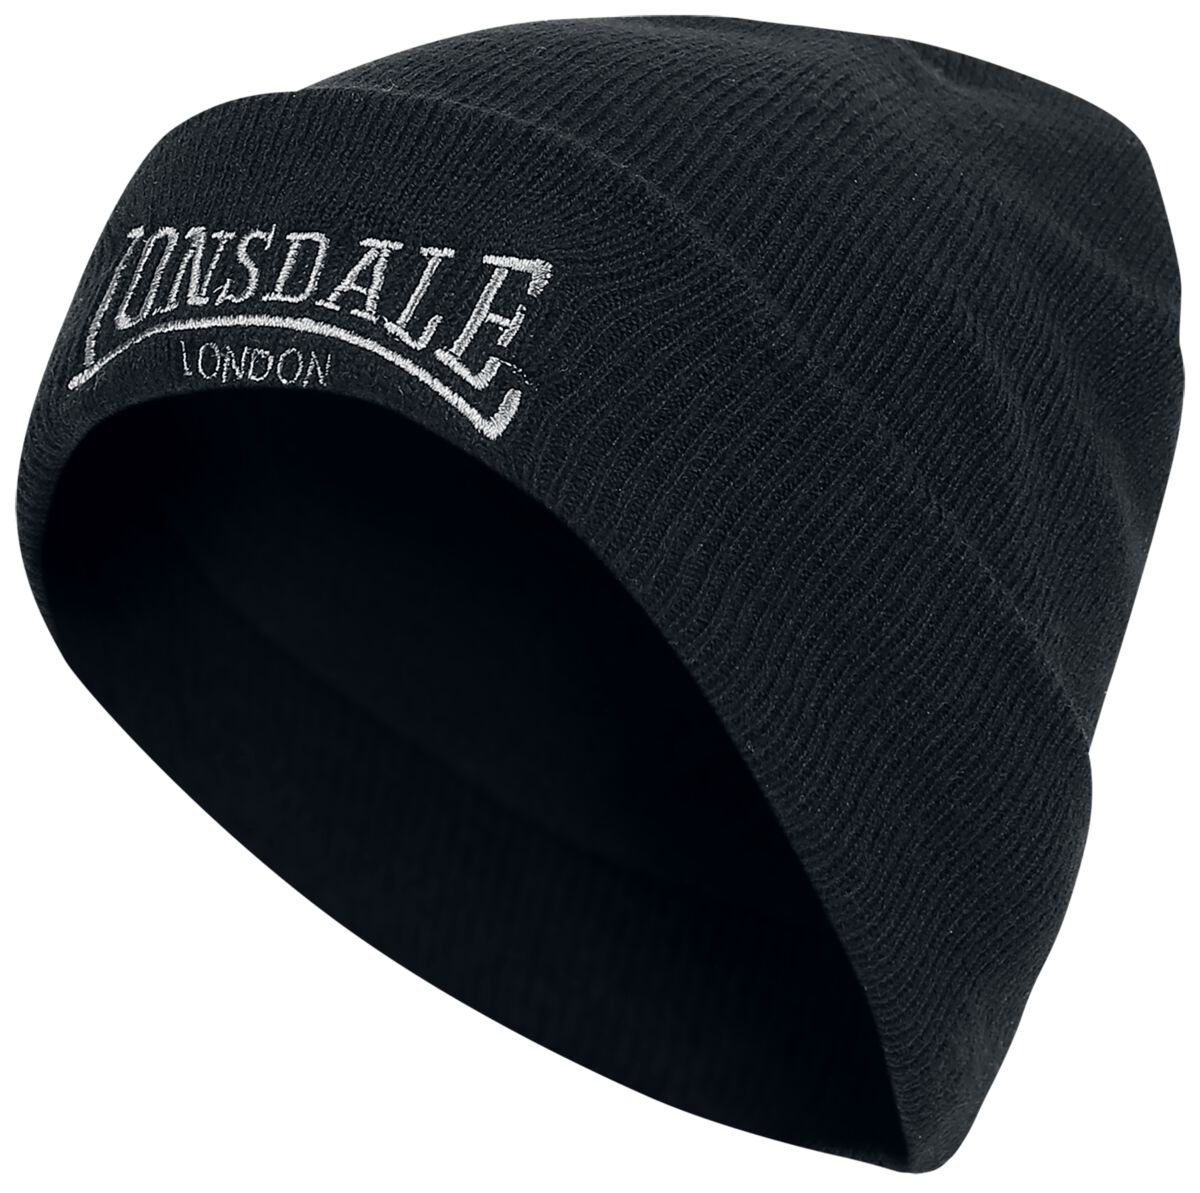 Lonsdale London Dundee Mütze schwarz